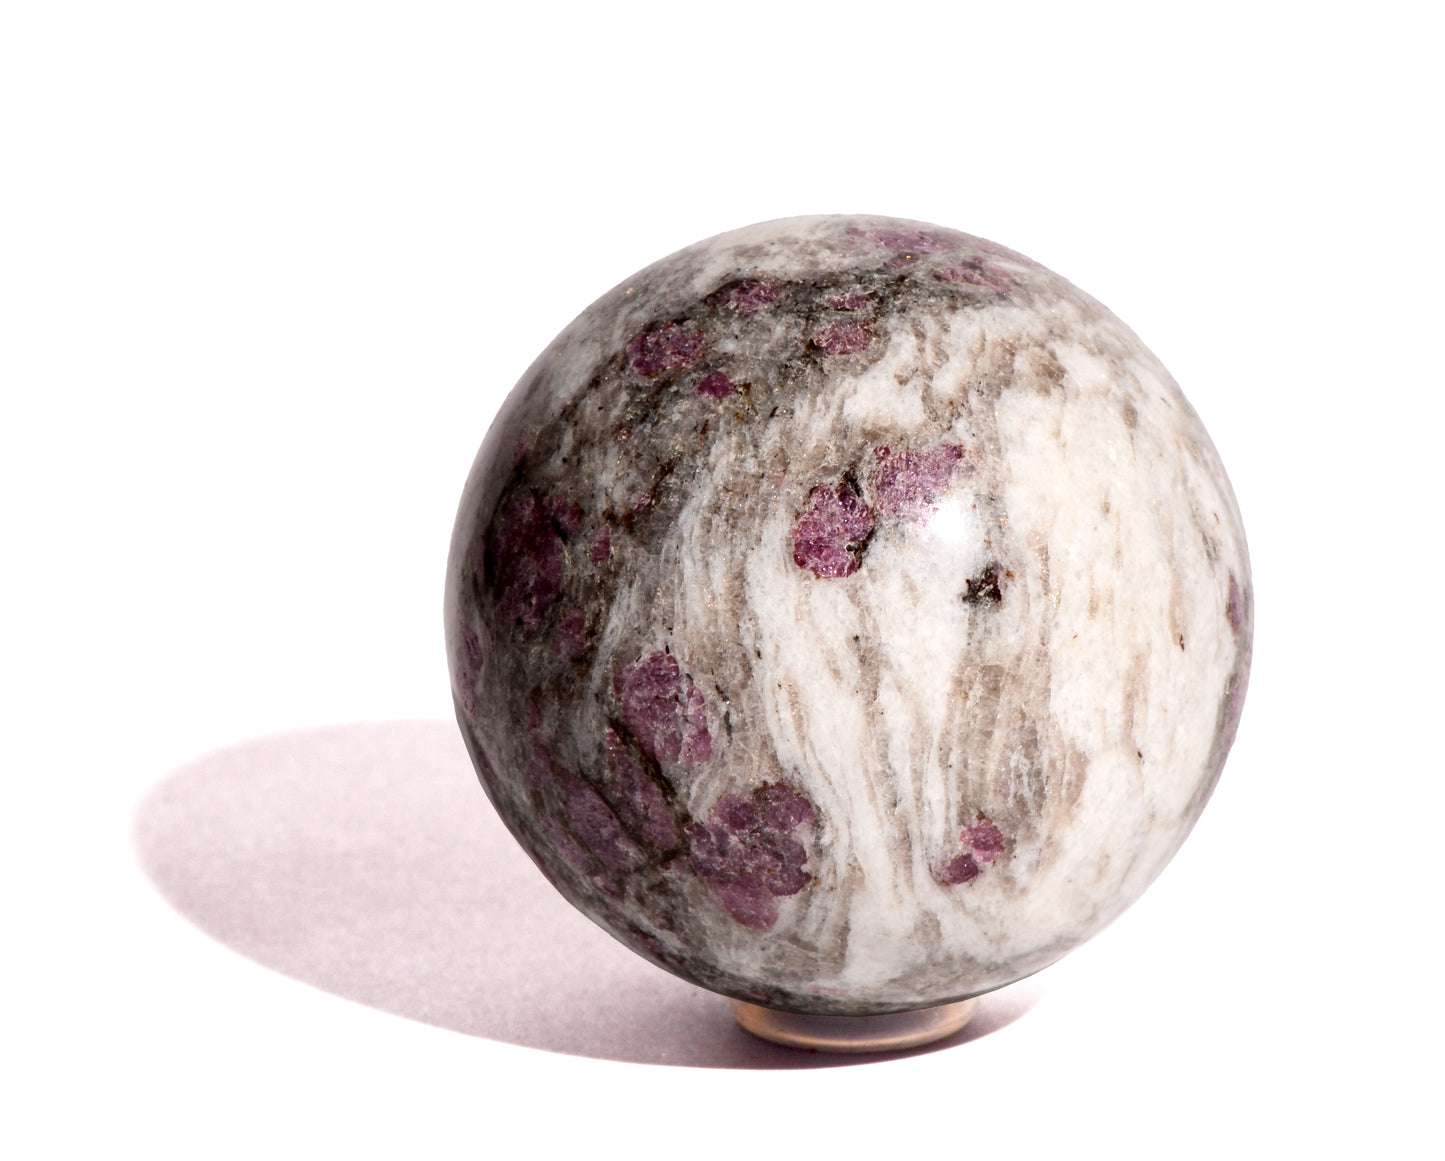 Garnet Sphere With Astrophyllite